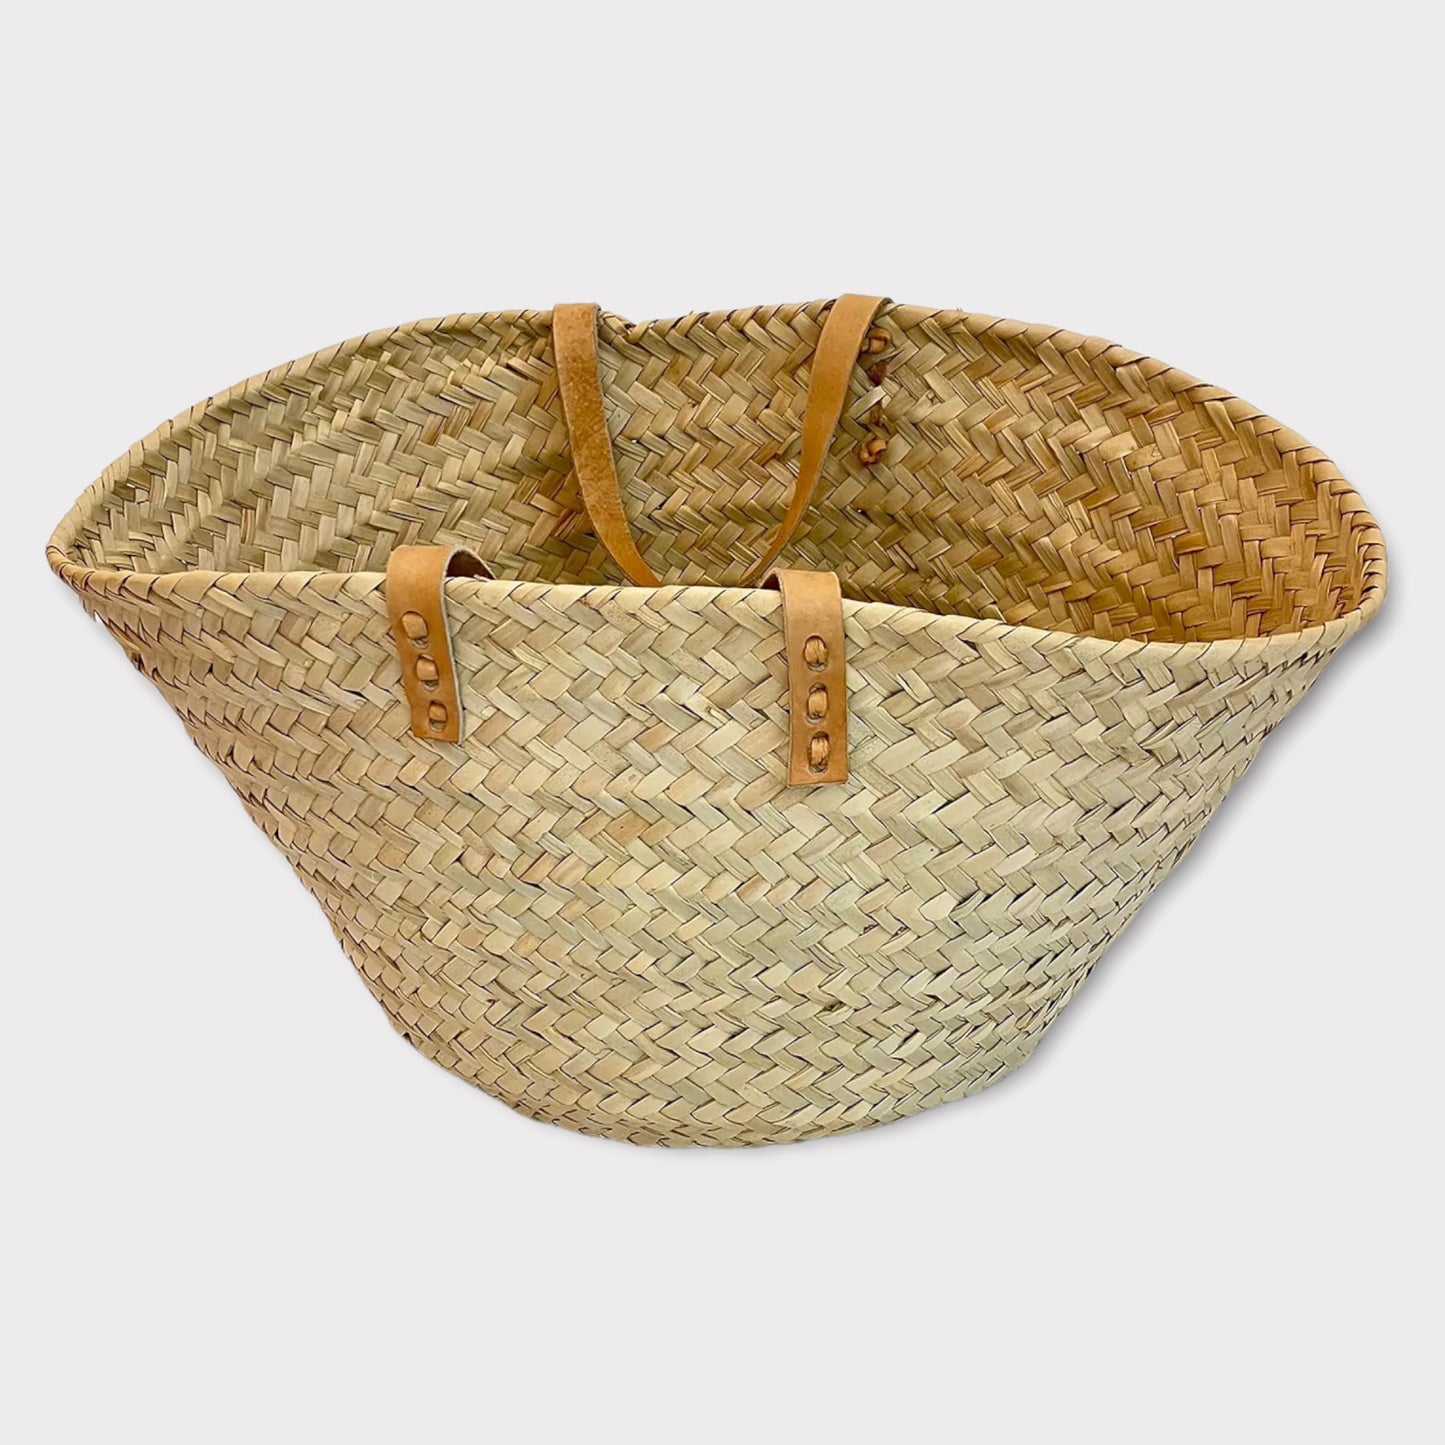 Market Baskets